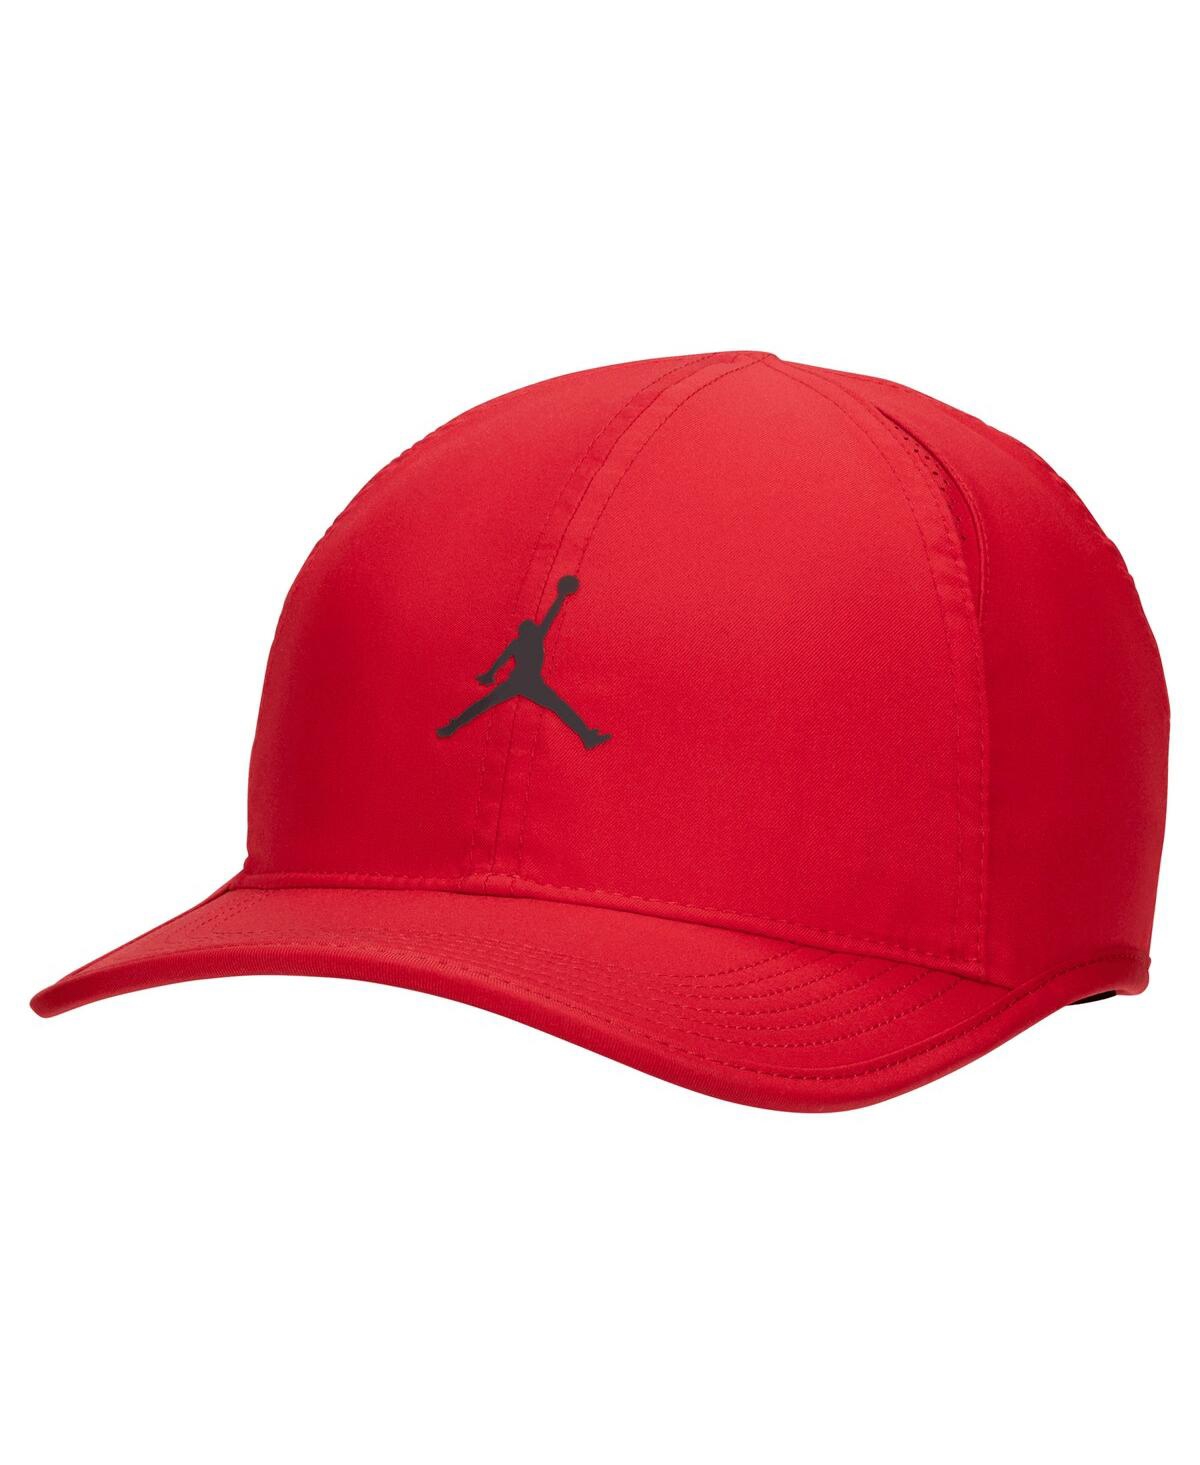 Jorand Men's Red Club Performance Adjustable Hat - Red